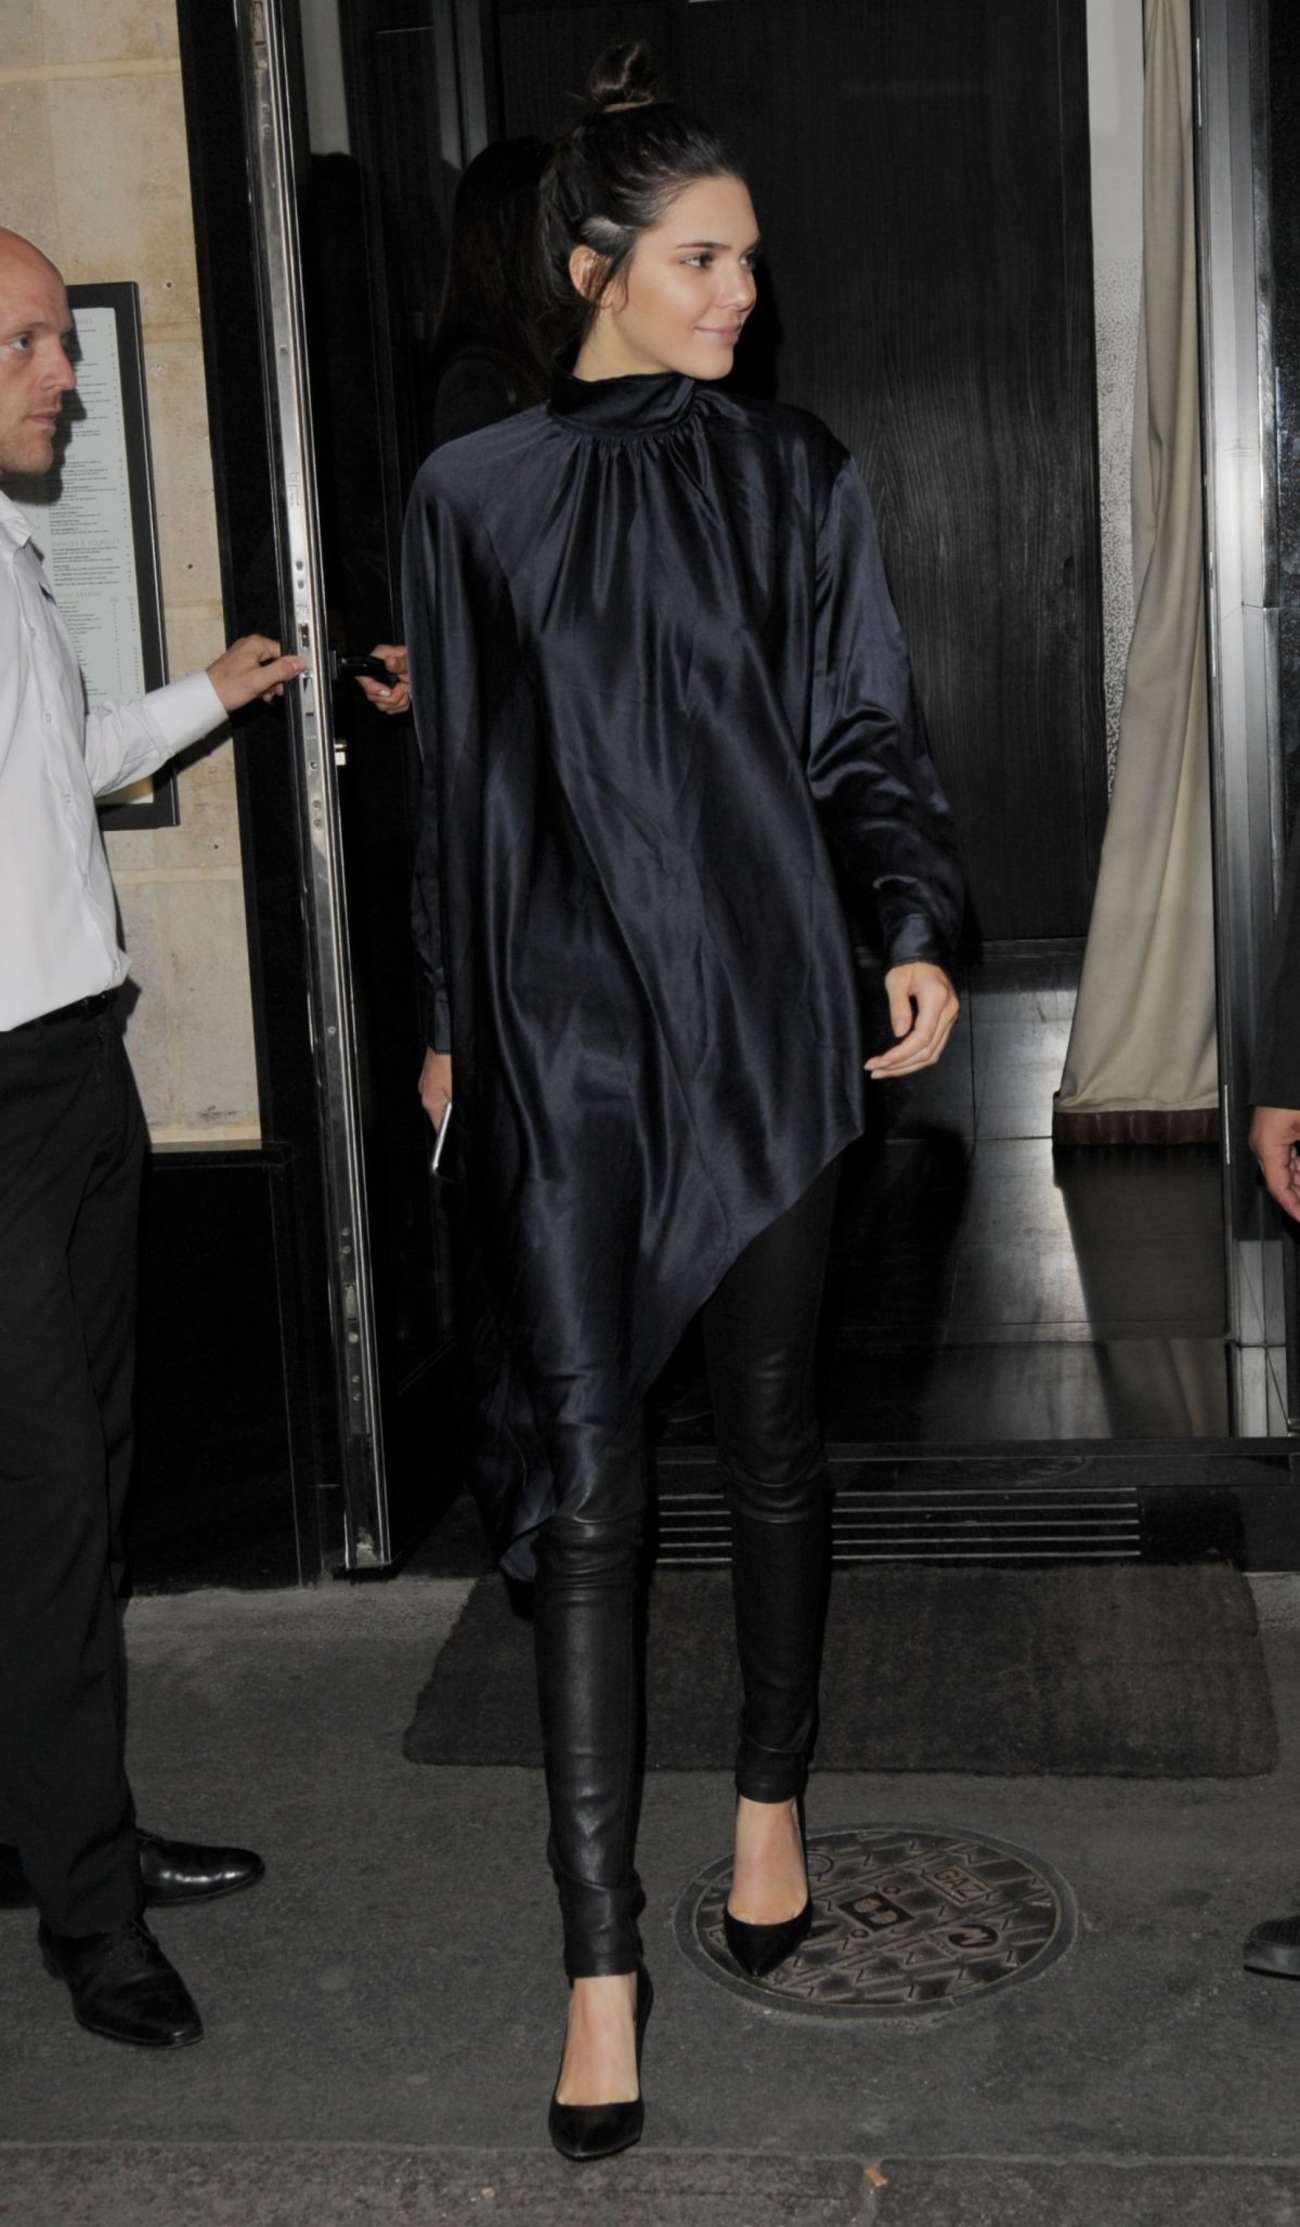 Kendall Jenner leaving Kinu Japanese Restaurant